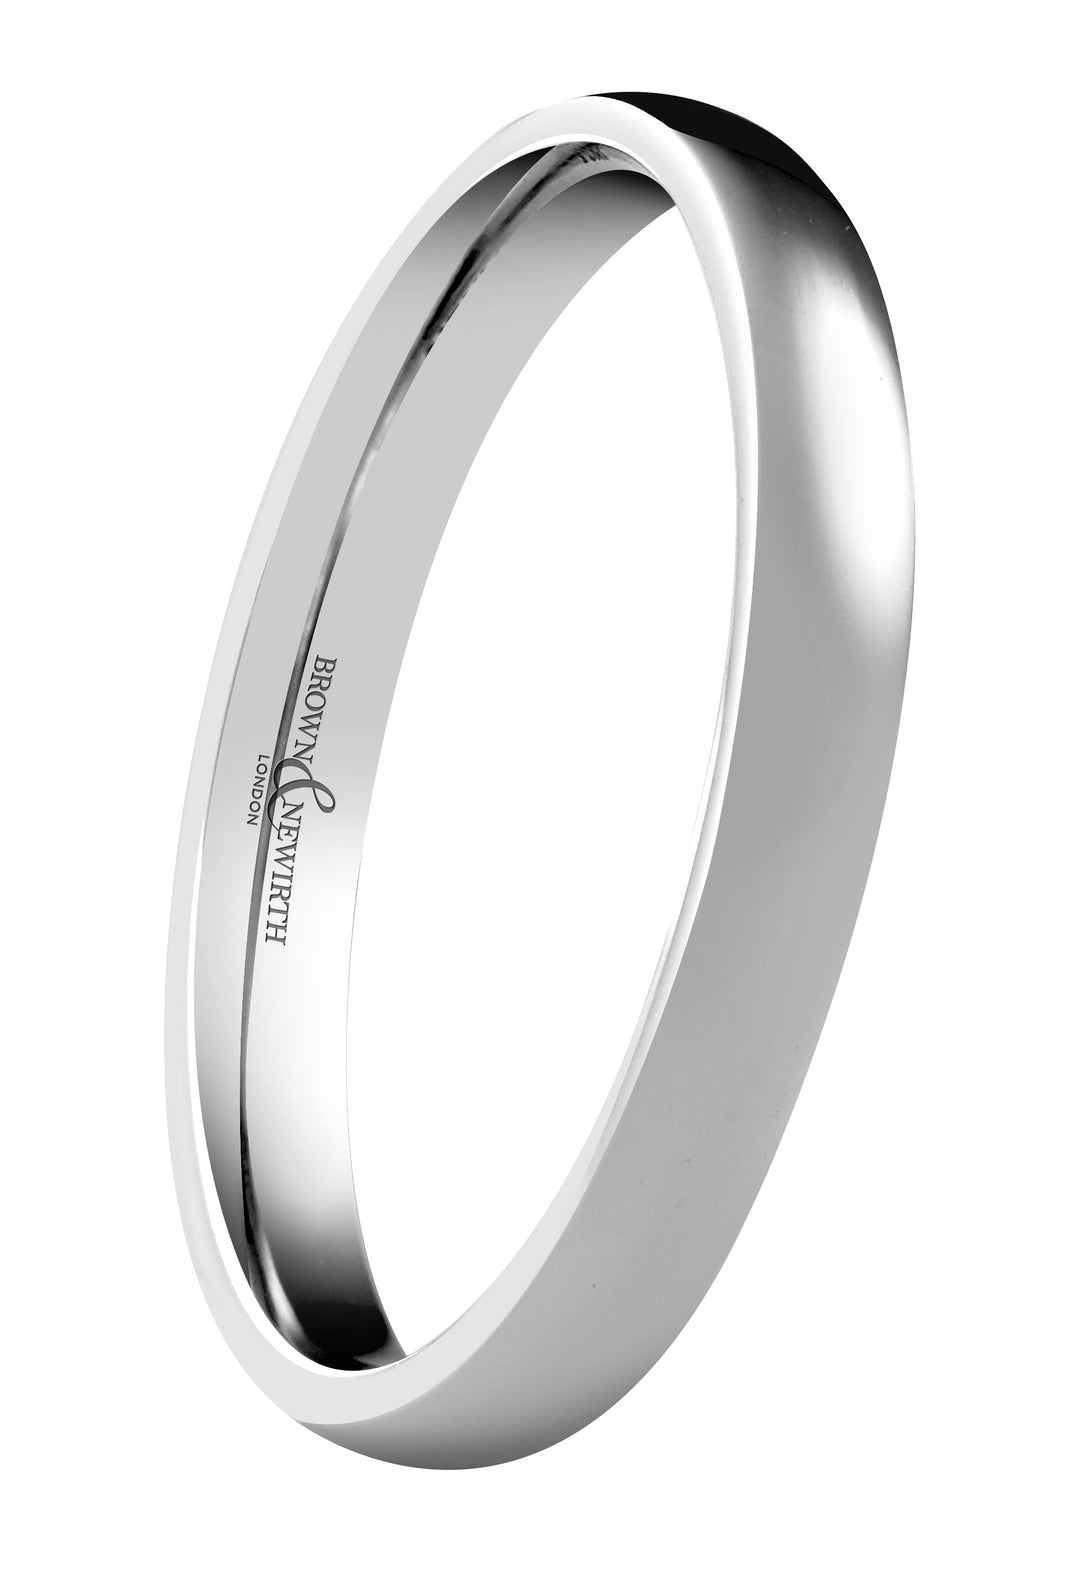 B&N Simplicity Wedding Ring 6mm